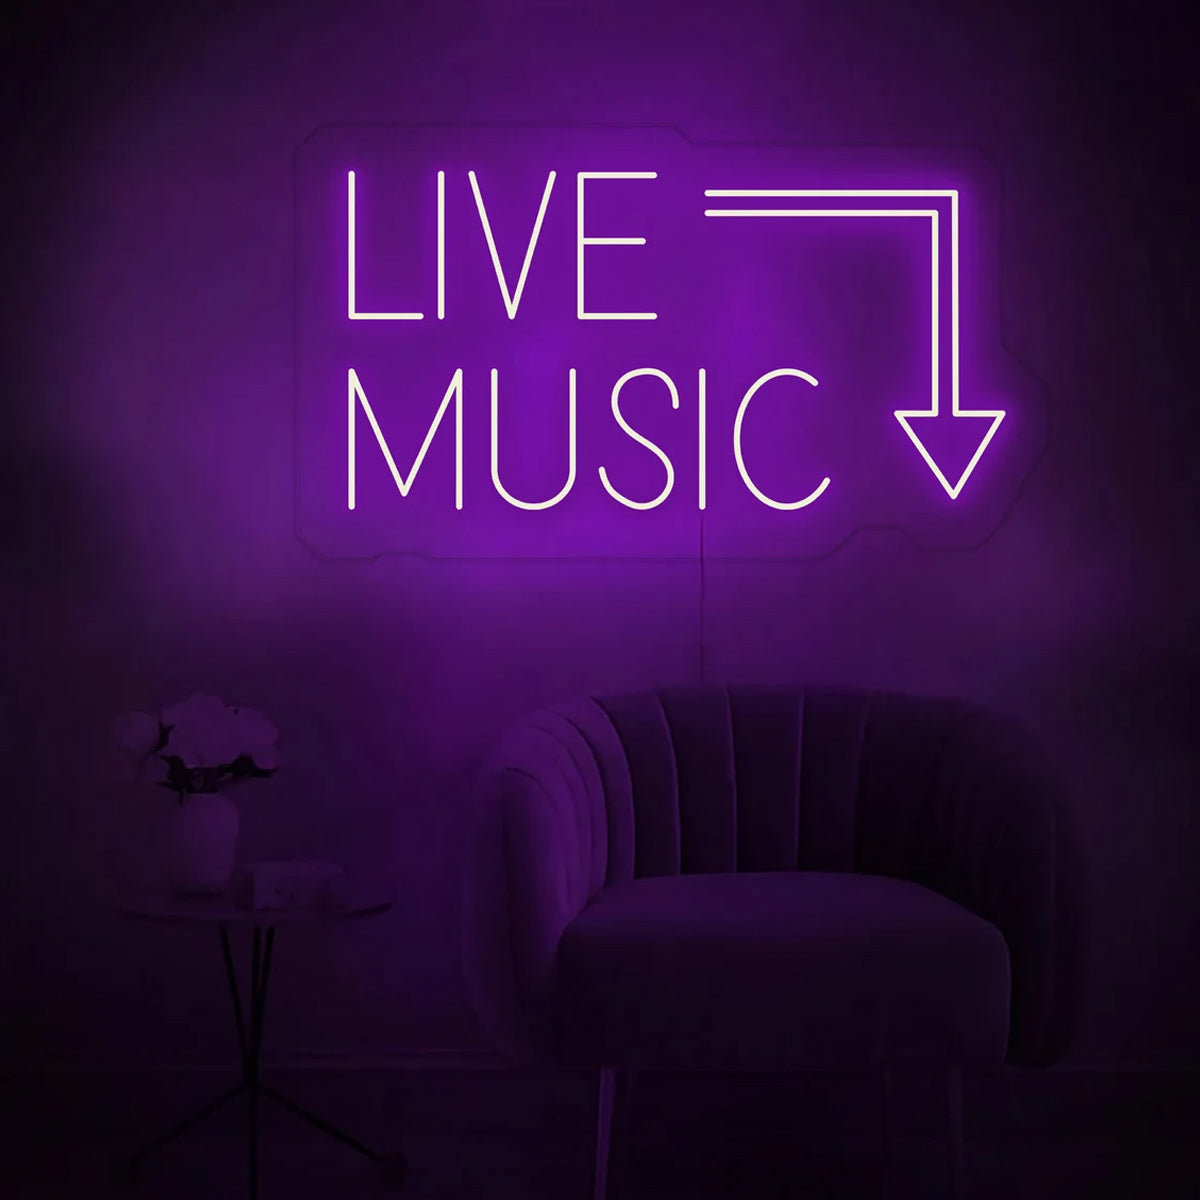 NEONIP-100% Handmade LIVE MUSIC Neon Sign,Music Studio Decor,Retro Home Decor